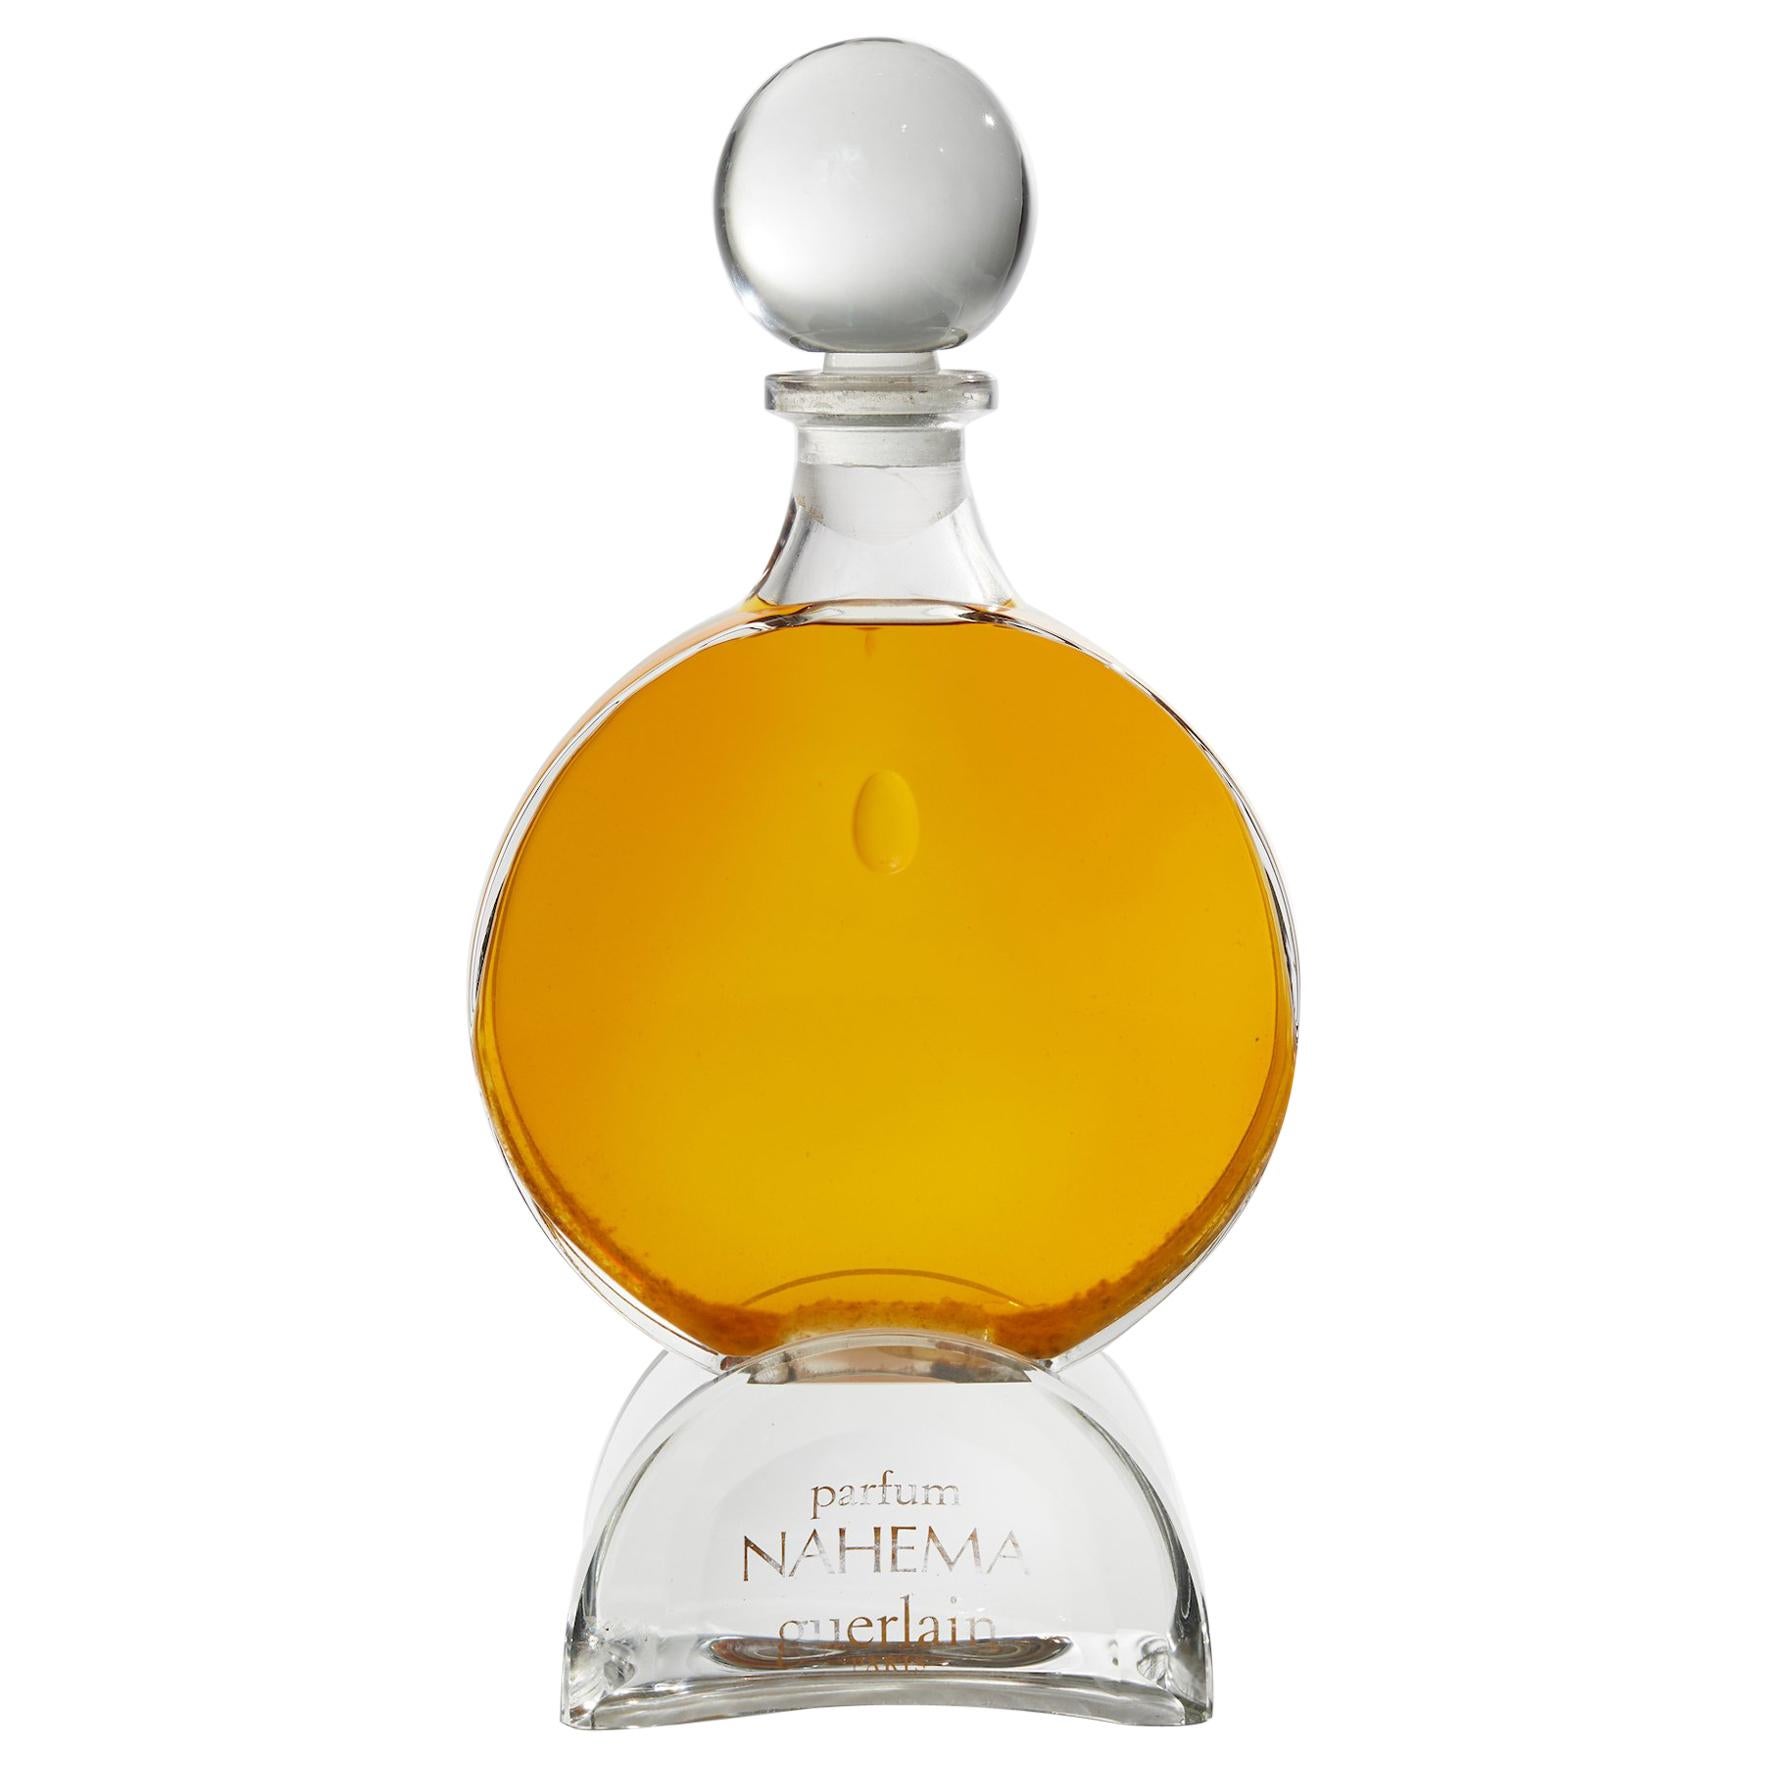 Glass Perfume Bottle "Nahema" by Guerlain